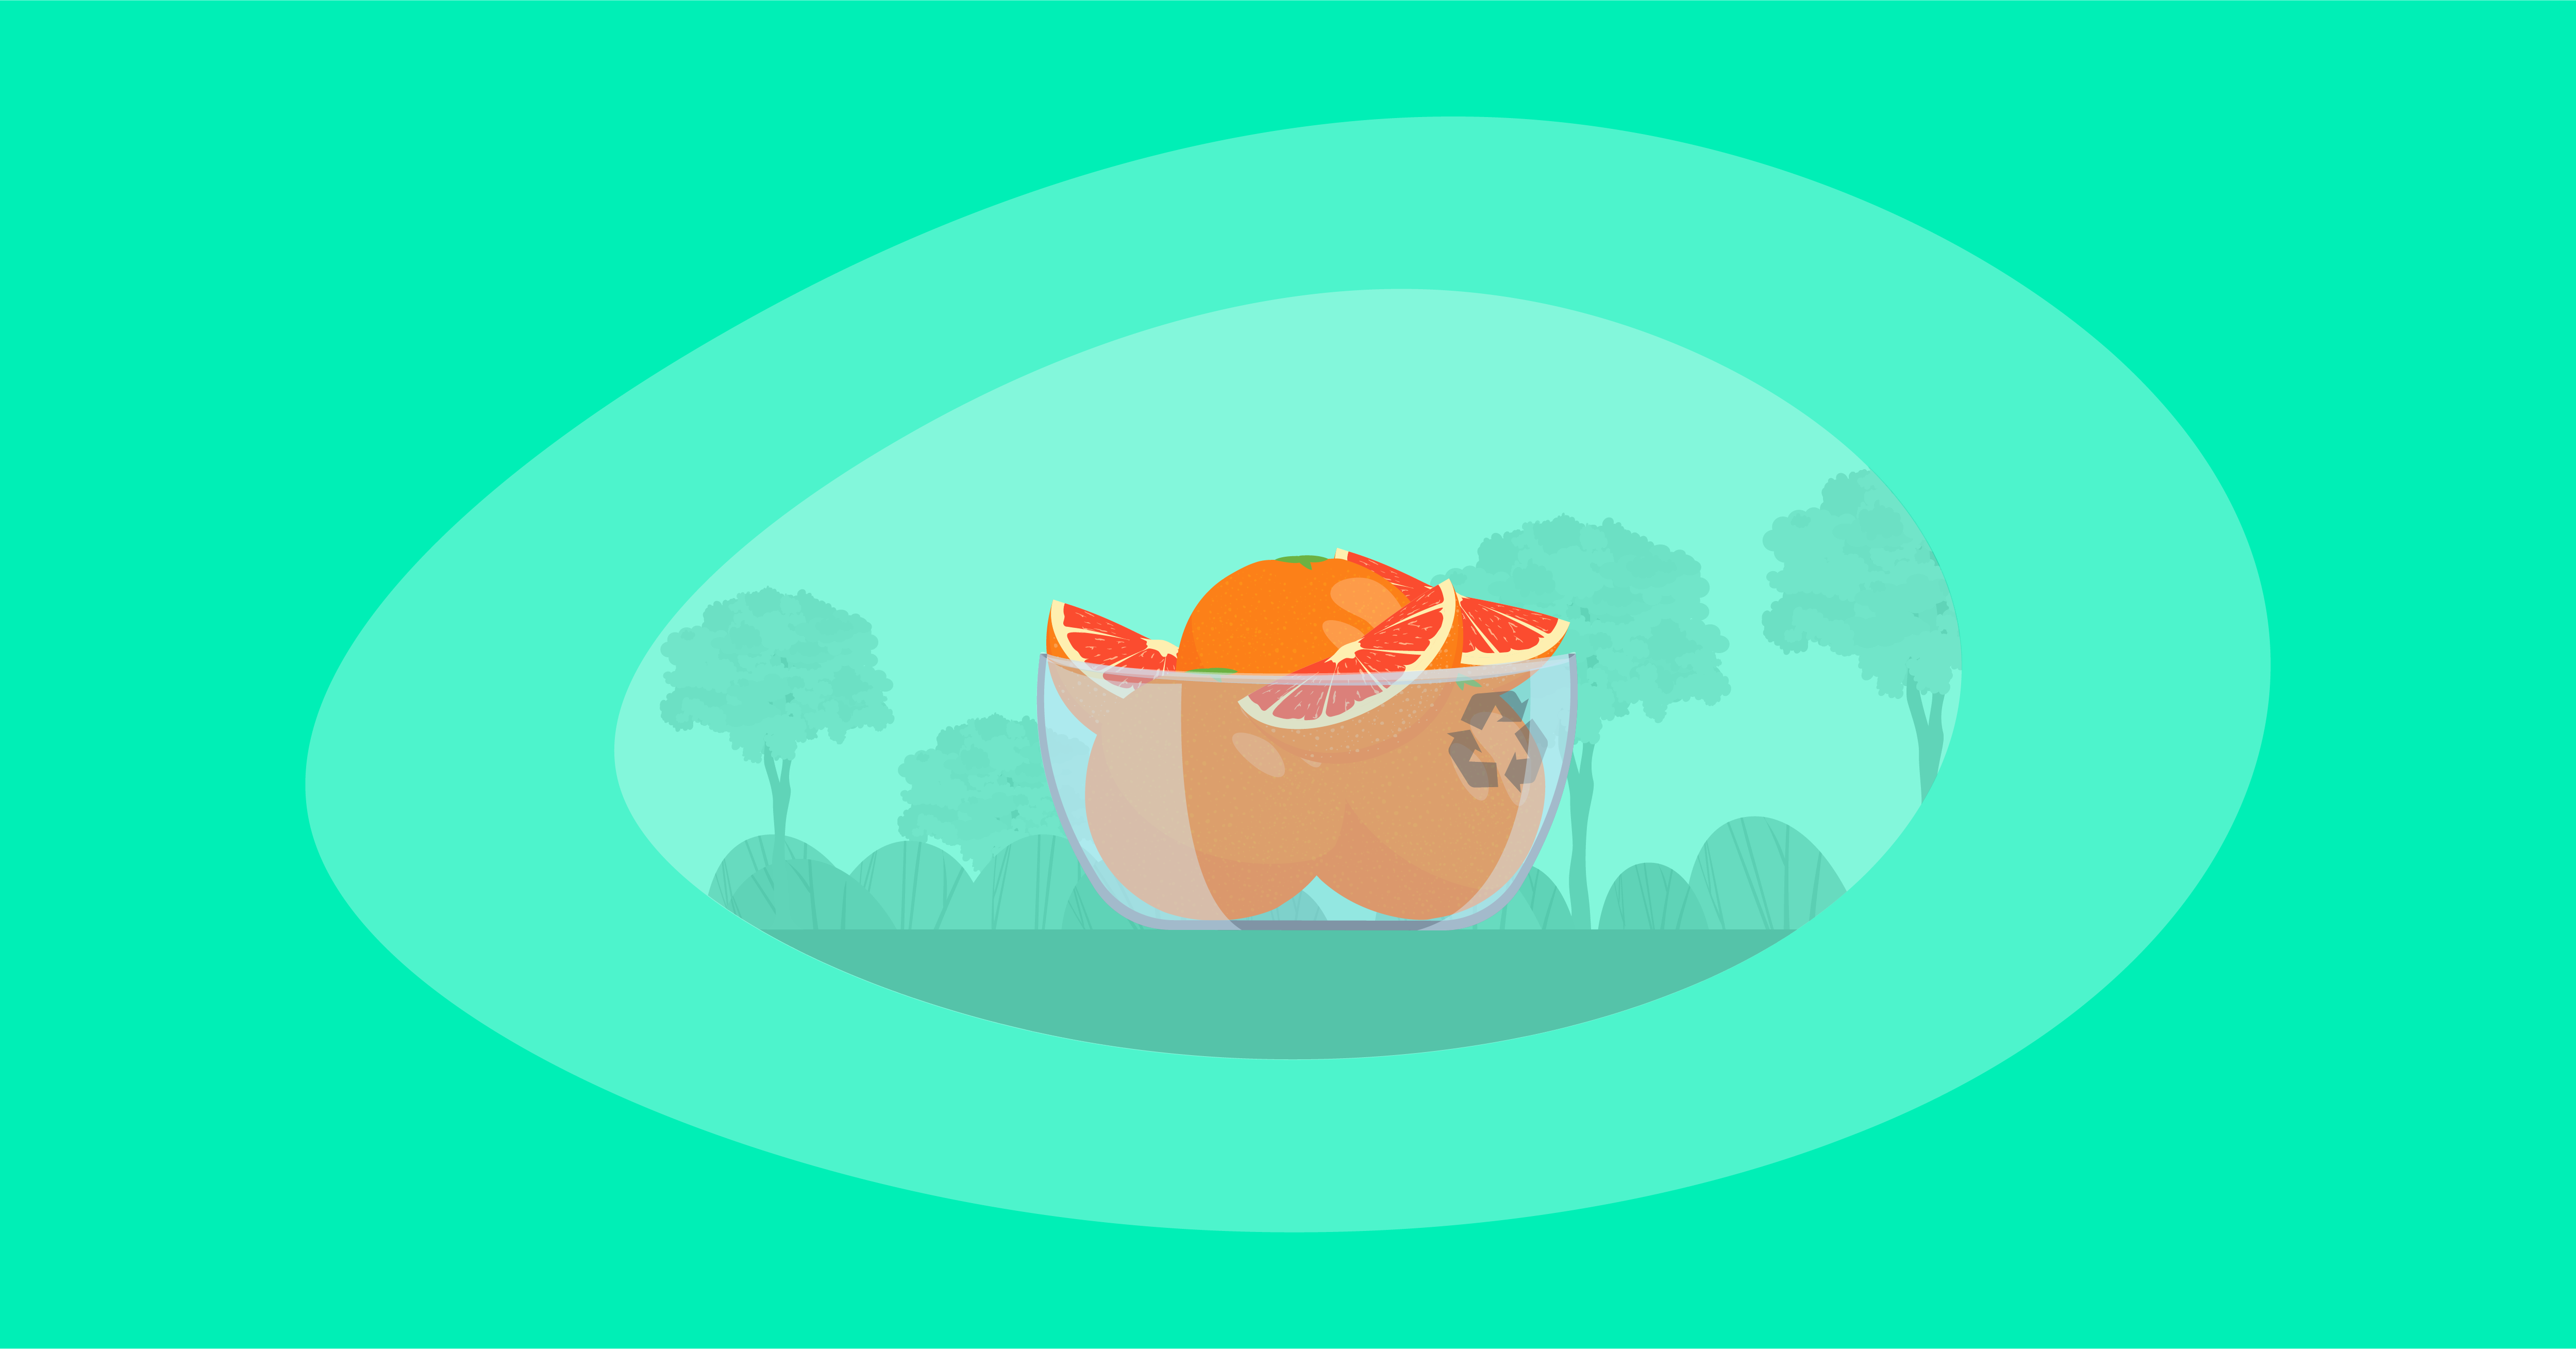 Illustration of grapefruits inside a glass bowl